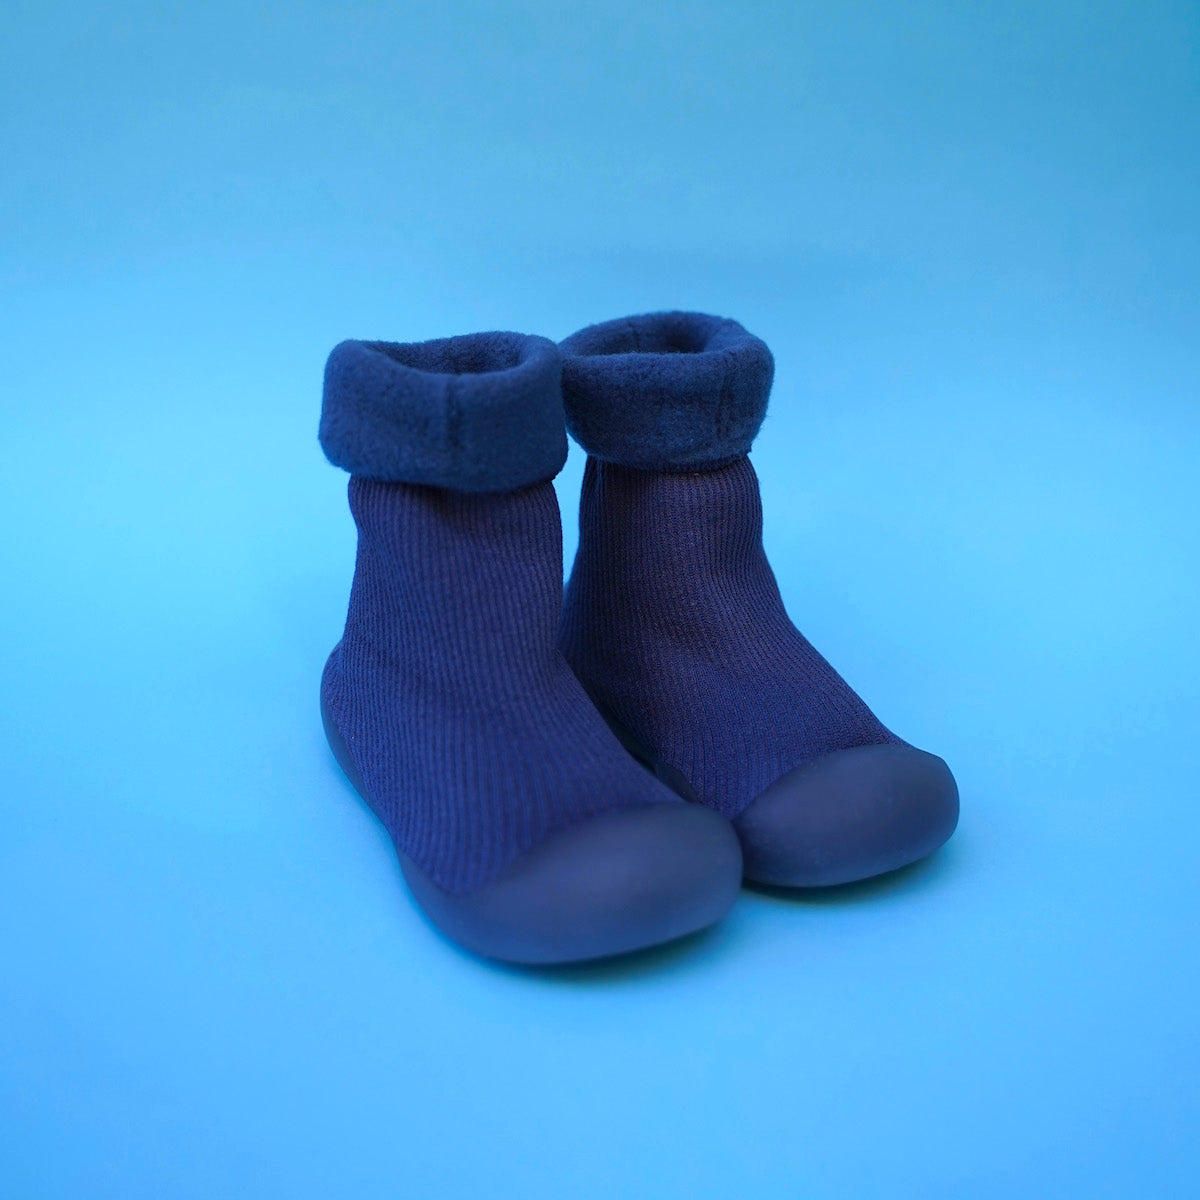 Infant Pre-Walker Warm Blue Kids Sock Shoes Rocks Stones Concrete